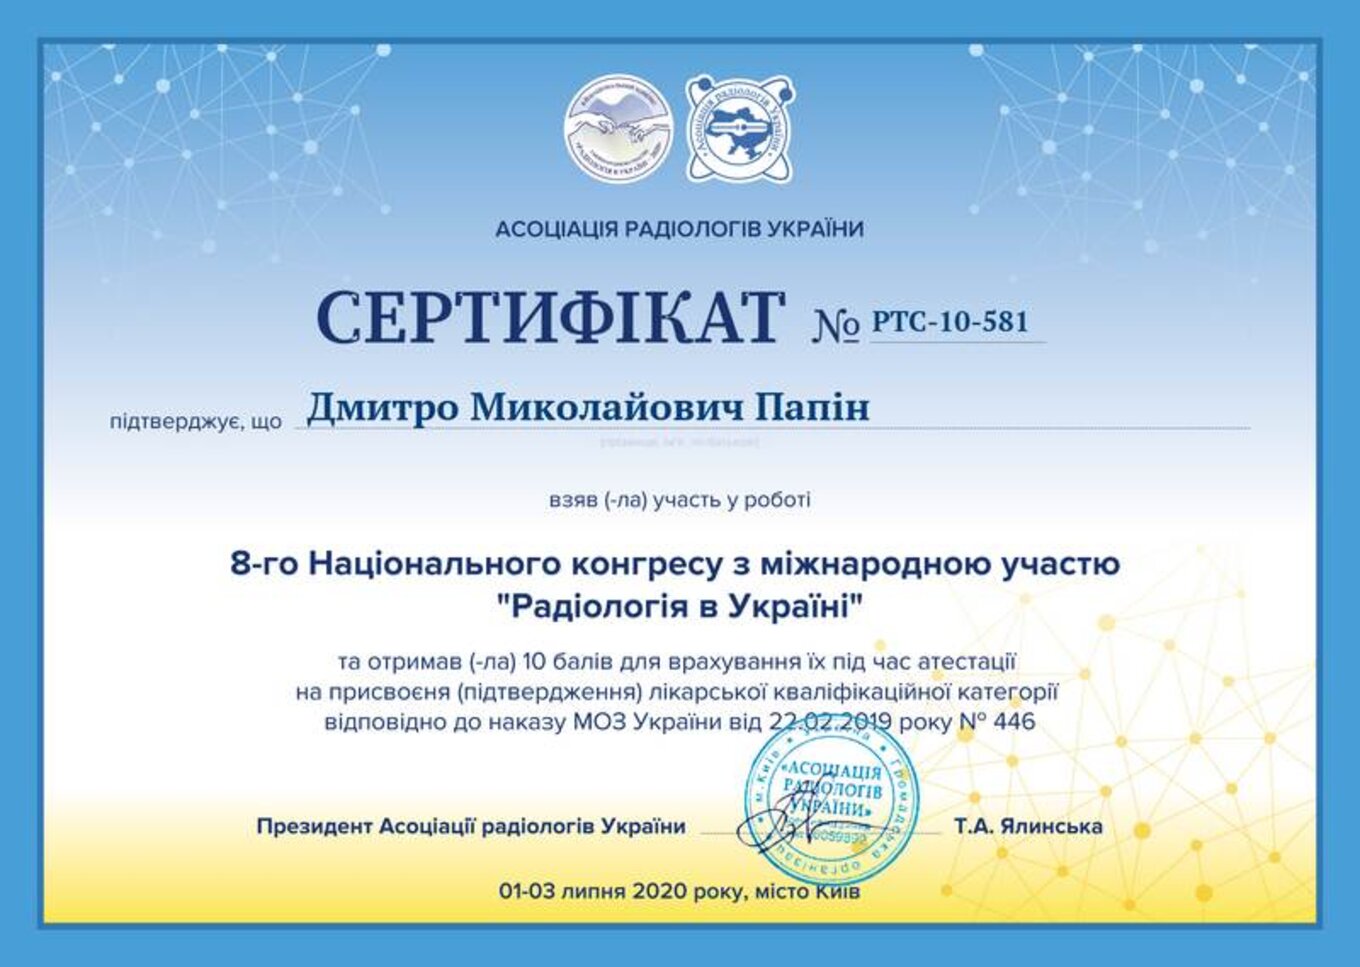 certificates/papin-dmitro-mikolajovich/erc-papin-certificates-06.jpg